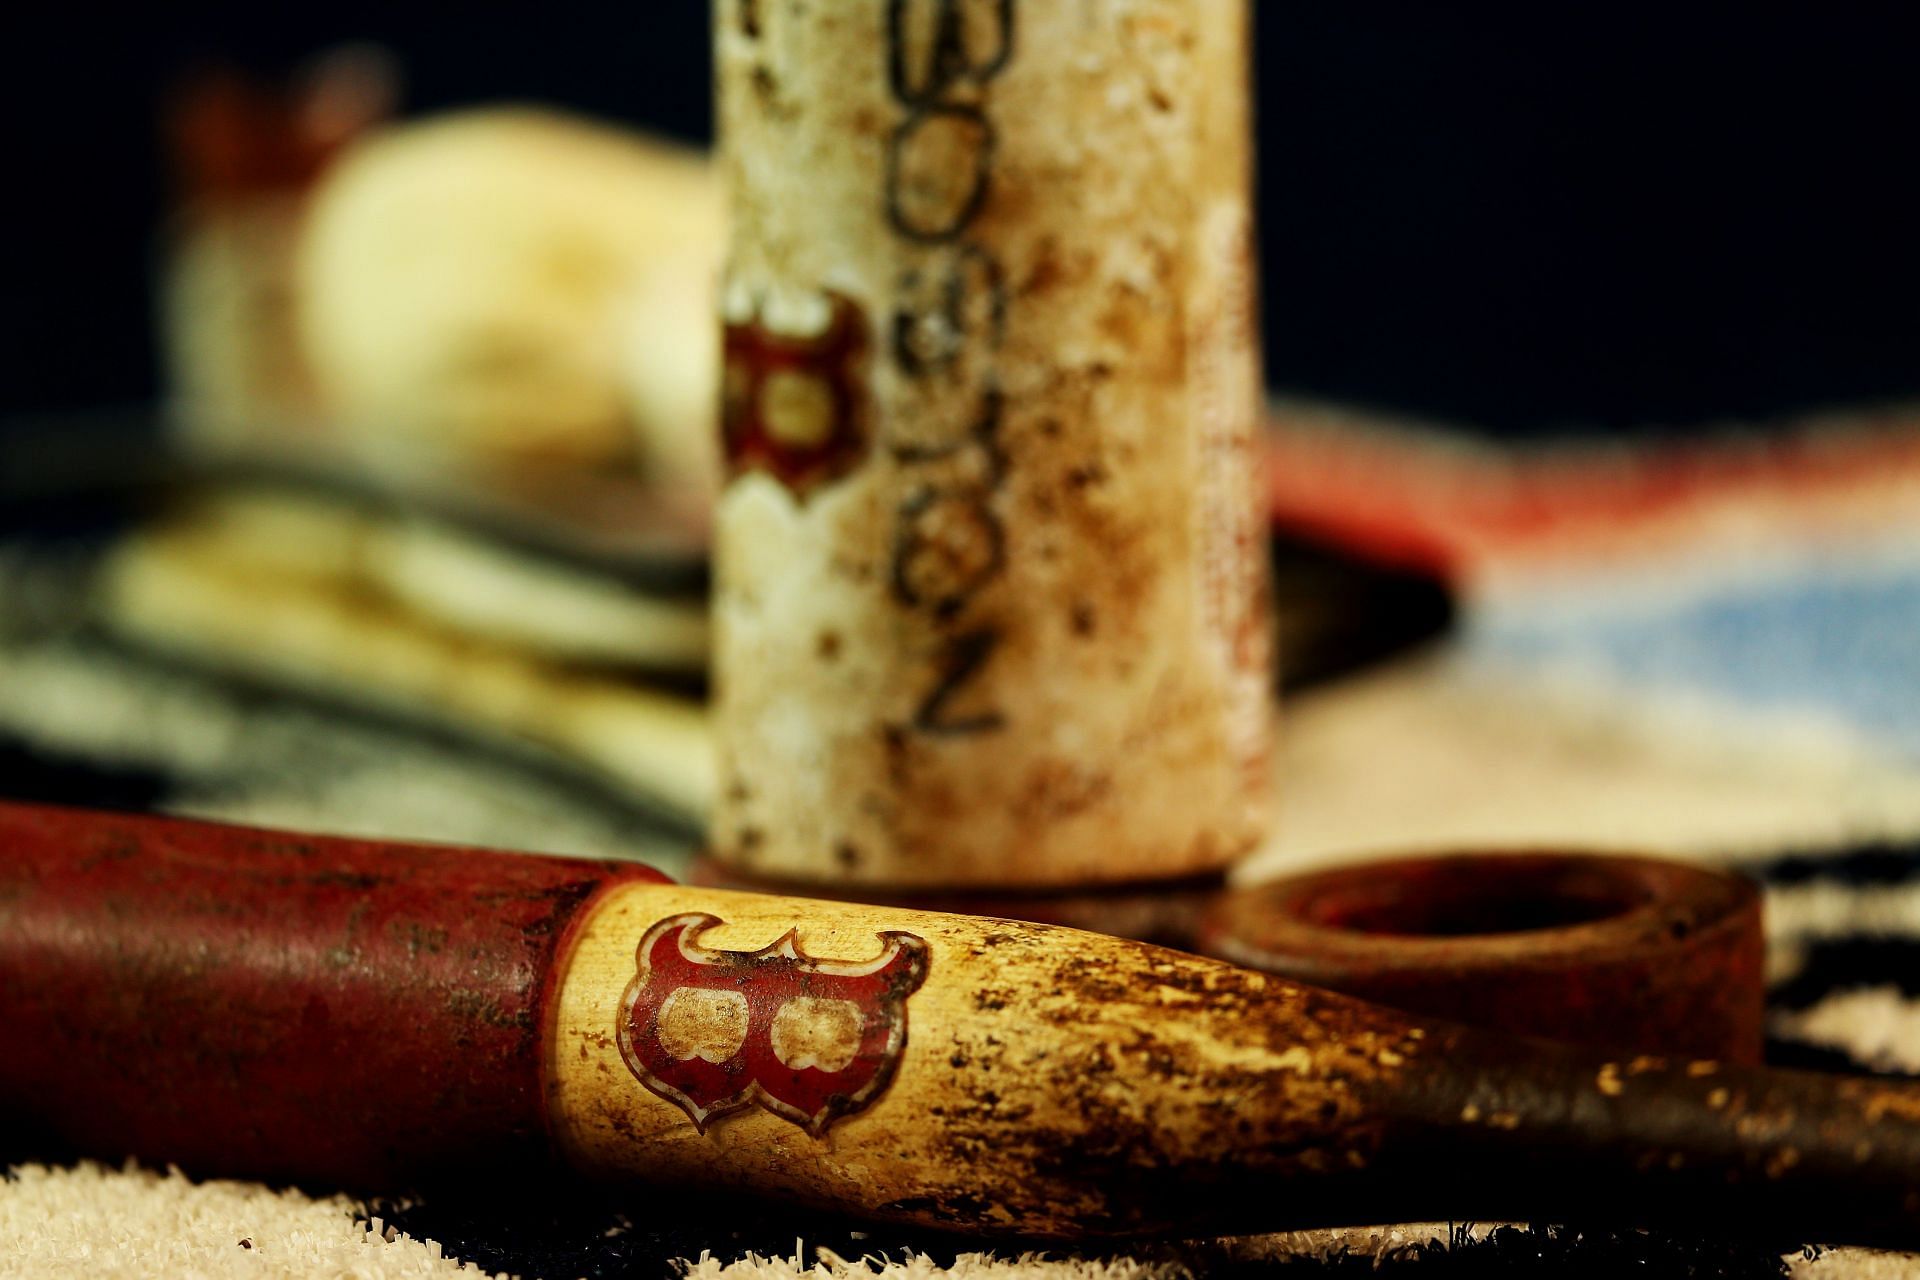 A detail of a Boston Red Sox bat